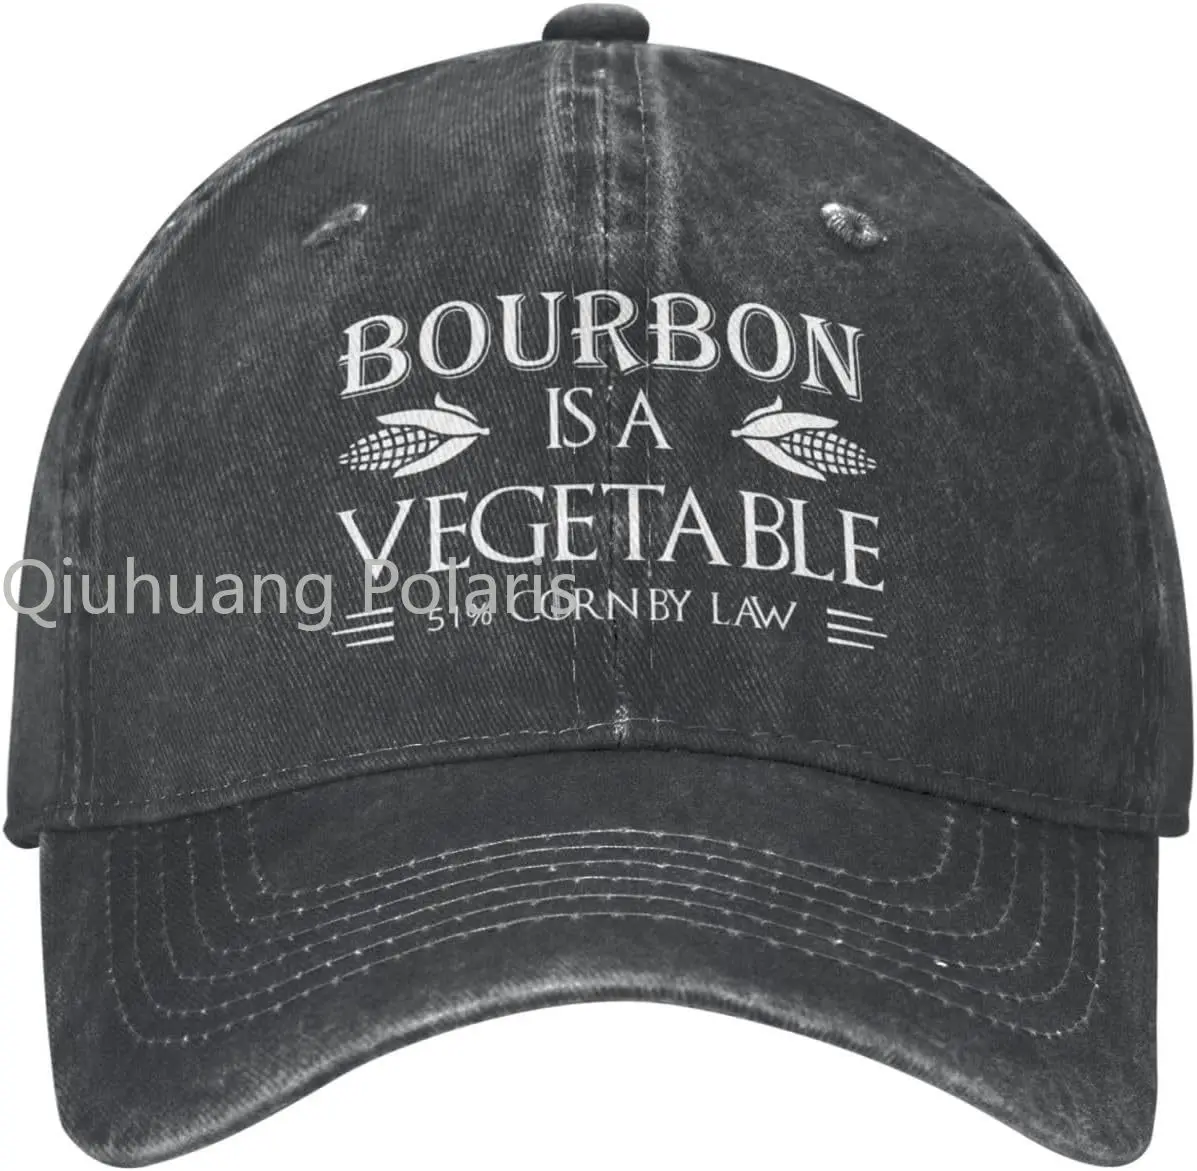 

Funny Hat Bourbon is A Vegetable 51% Corn by Law Hat Men Baseball Cap Vintage Hats